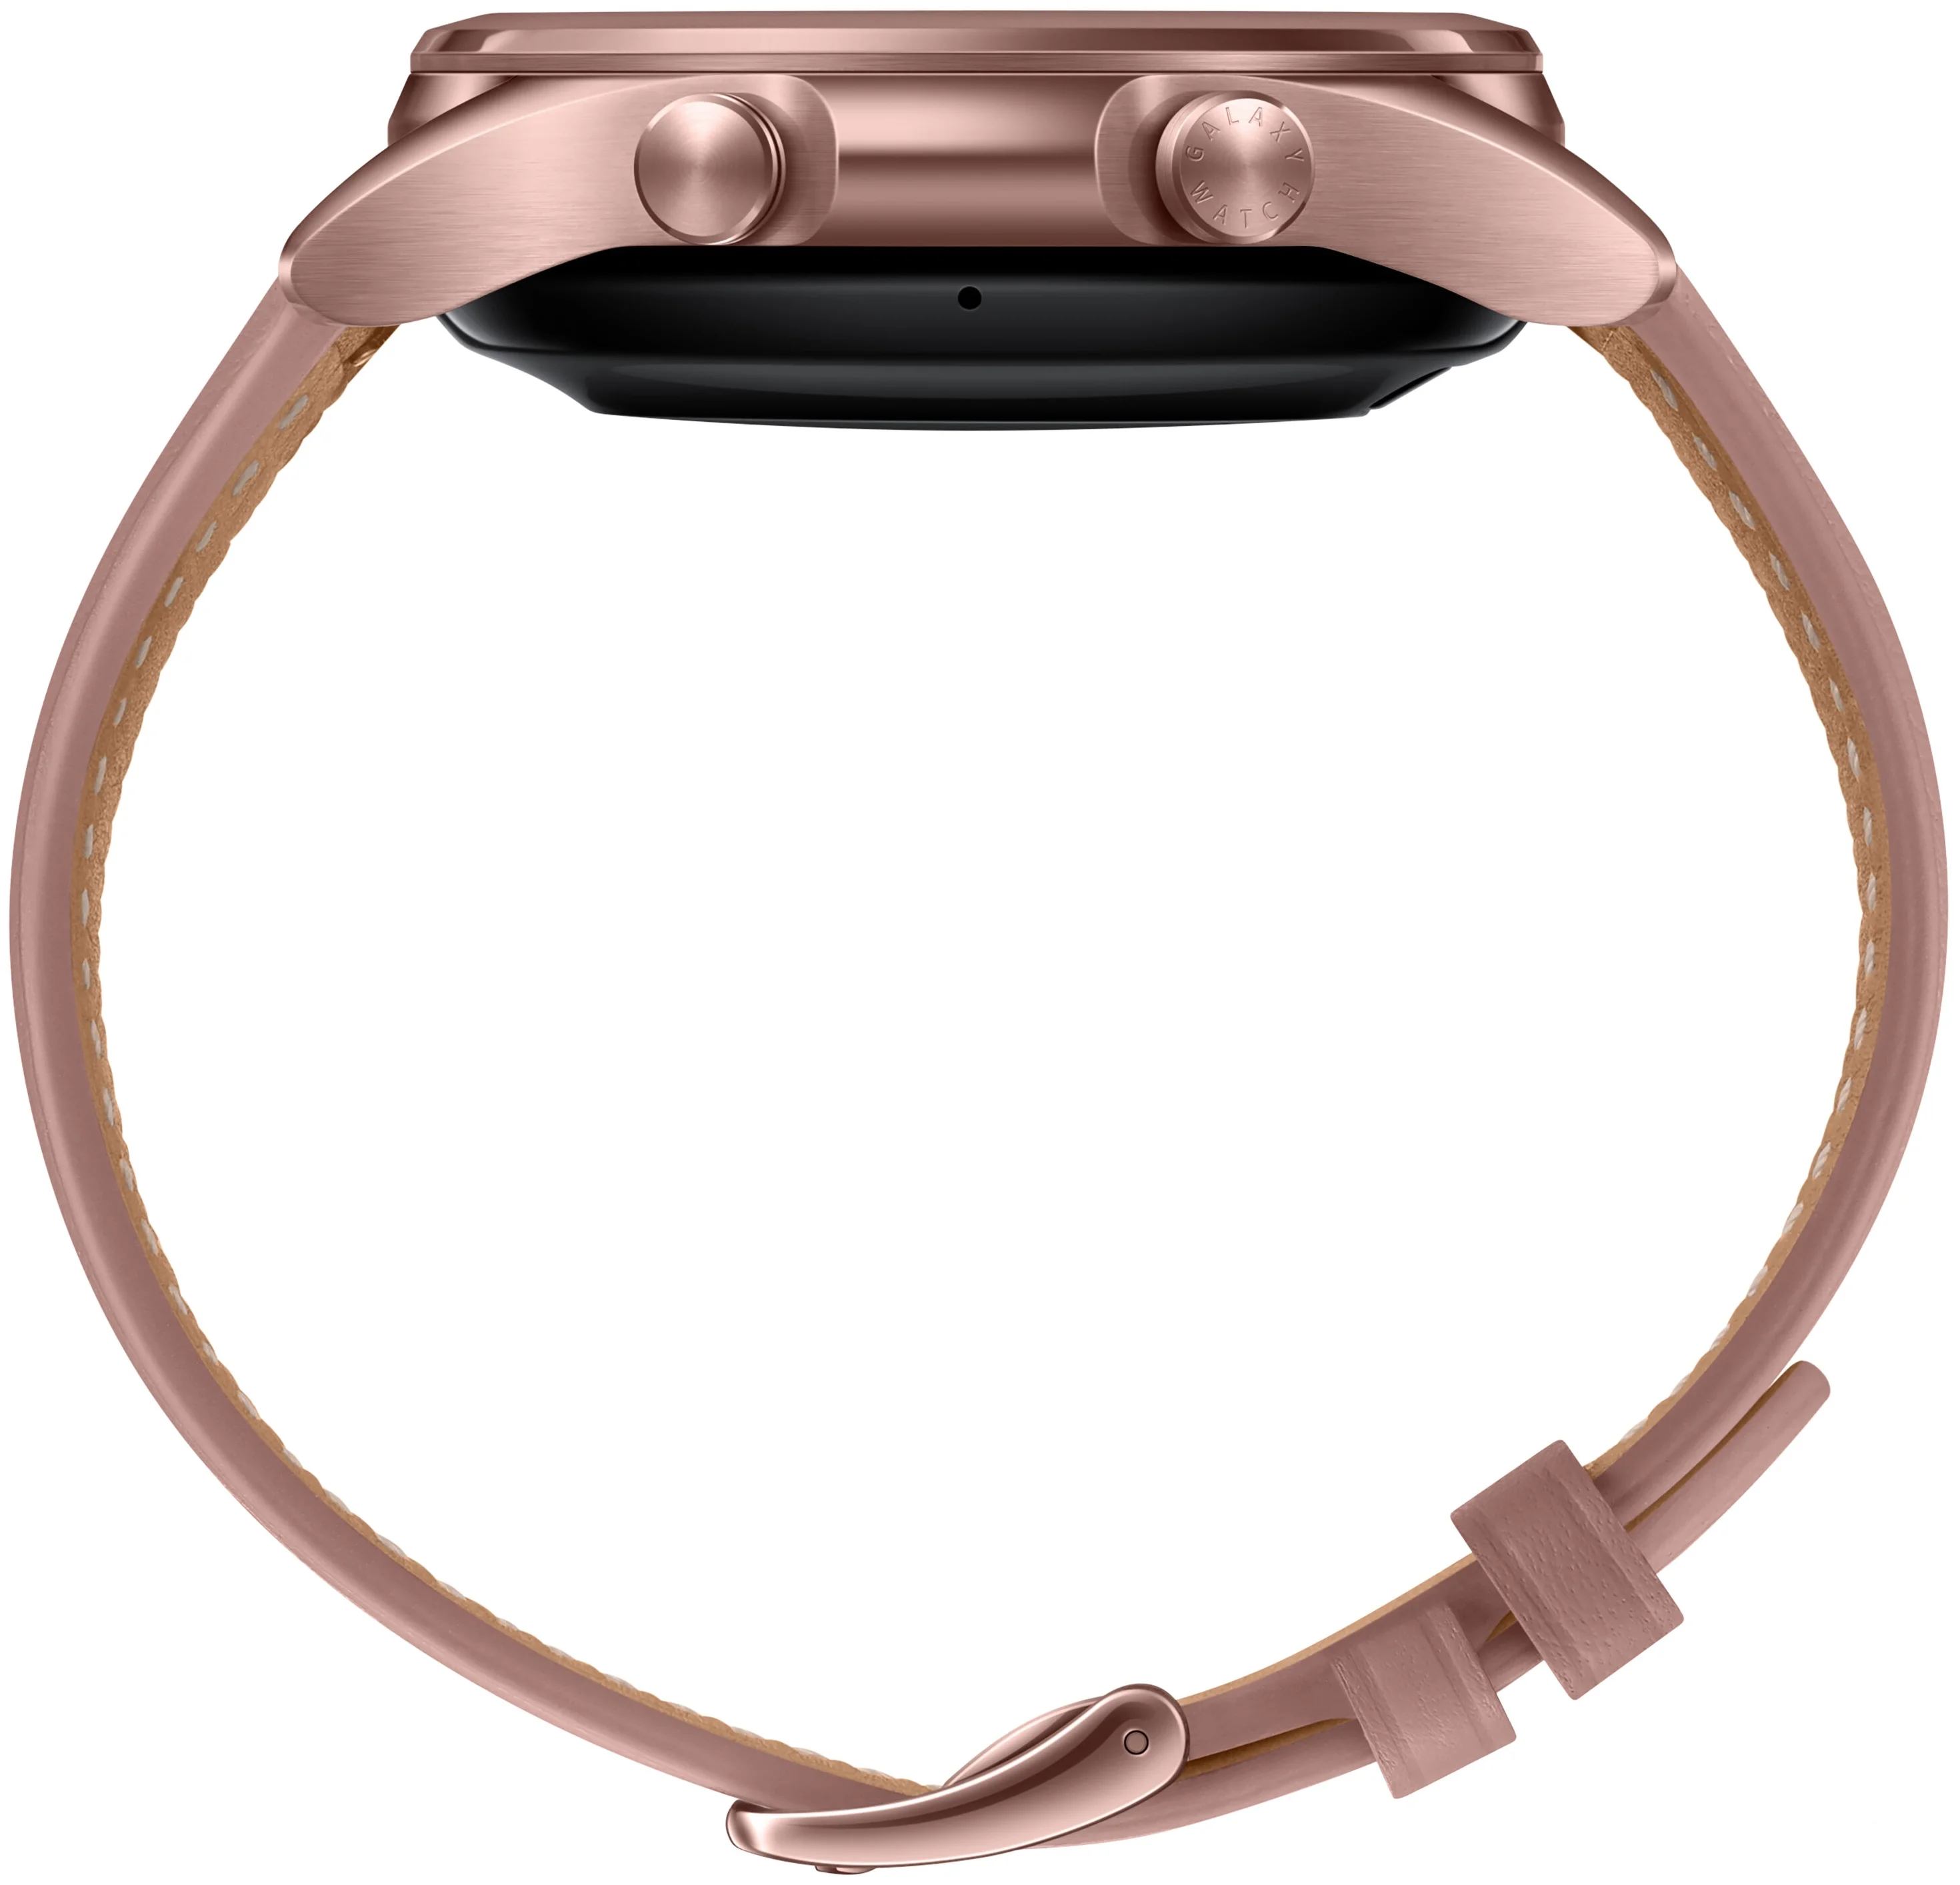 Samsung Galaxy Watch3 41мм - интерфейсы: Wi-Fi, NFC, Bluetooth 5.0